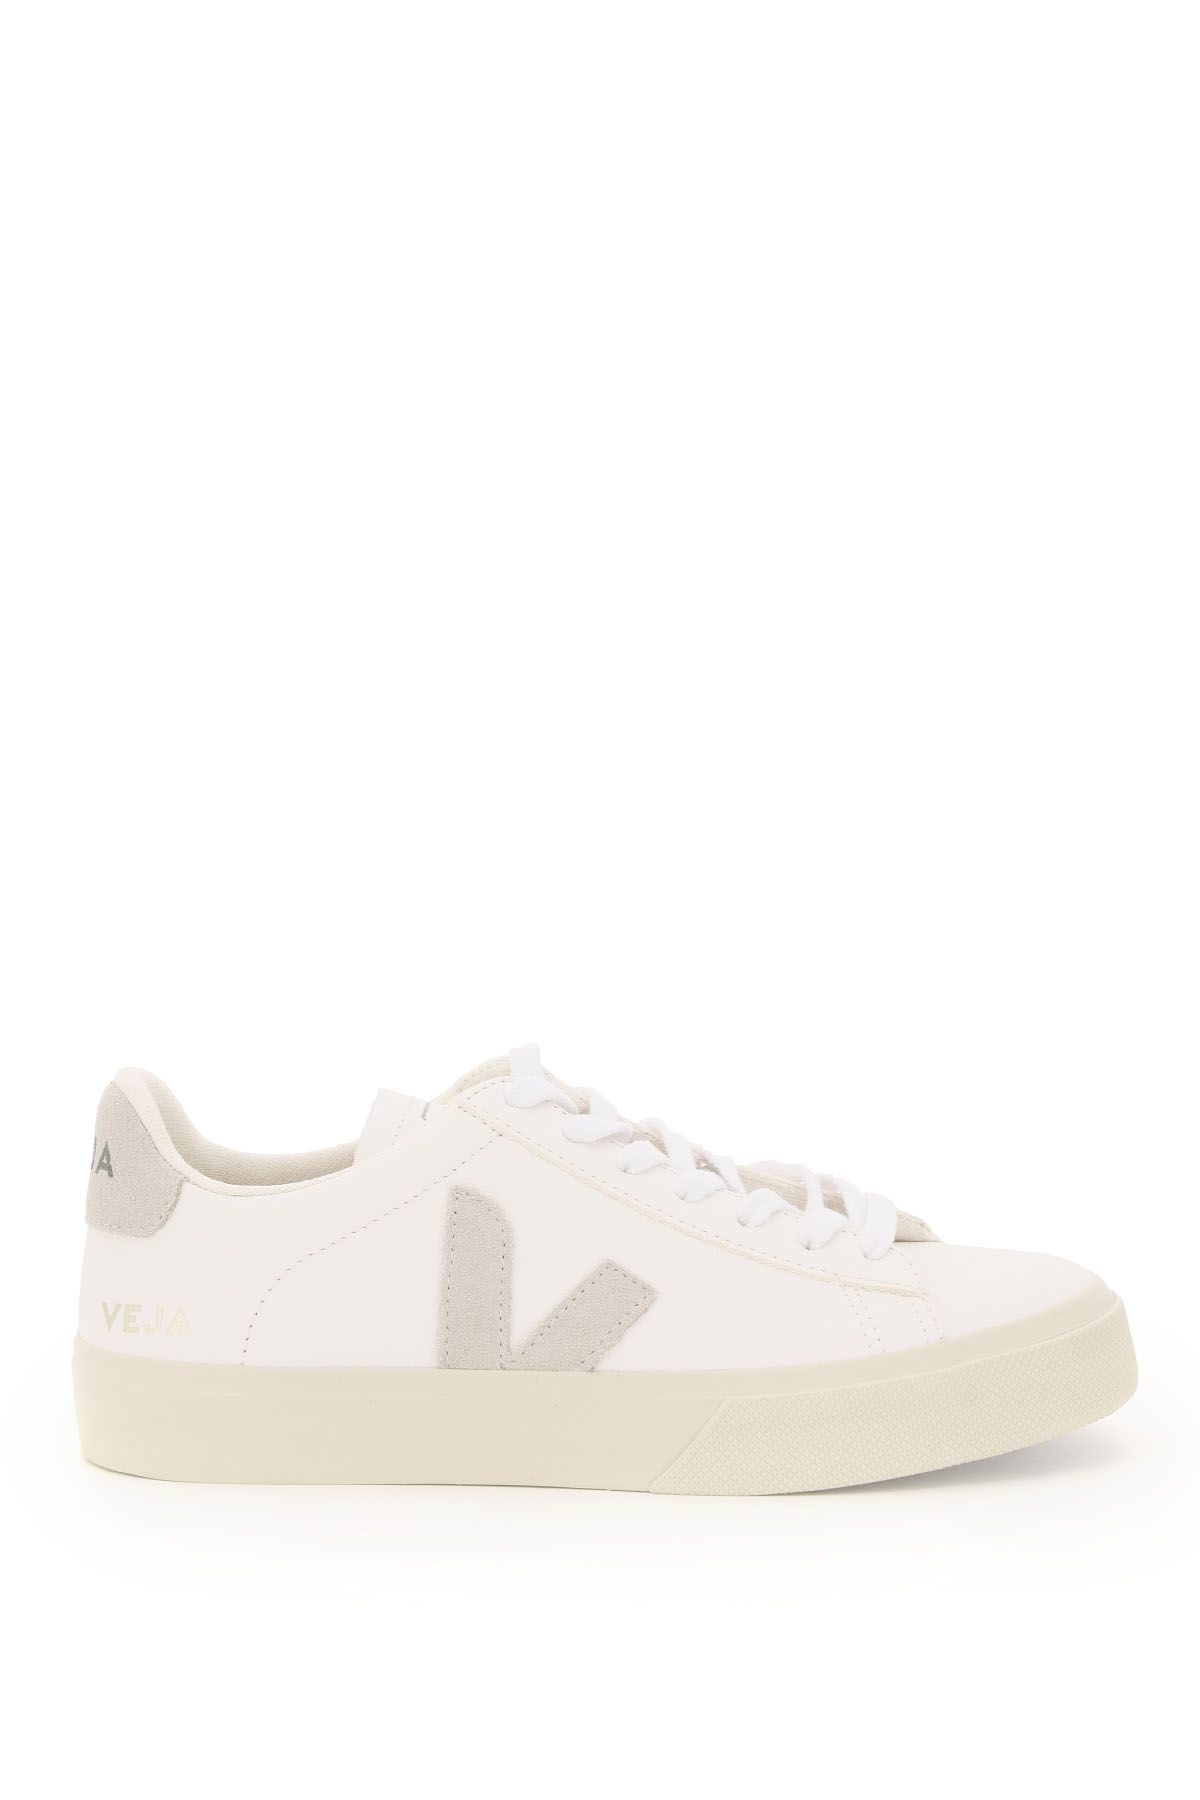 Shop Veja Campo Sneakers In White,grey